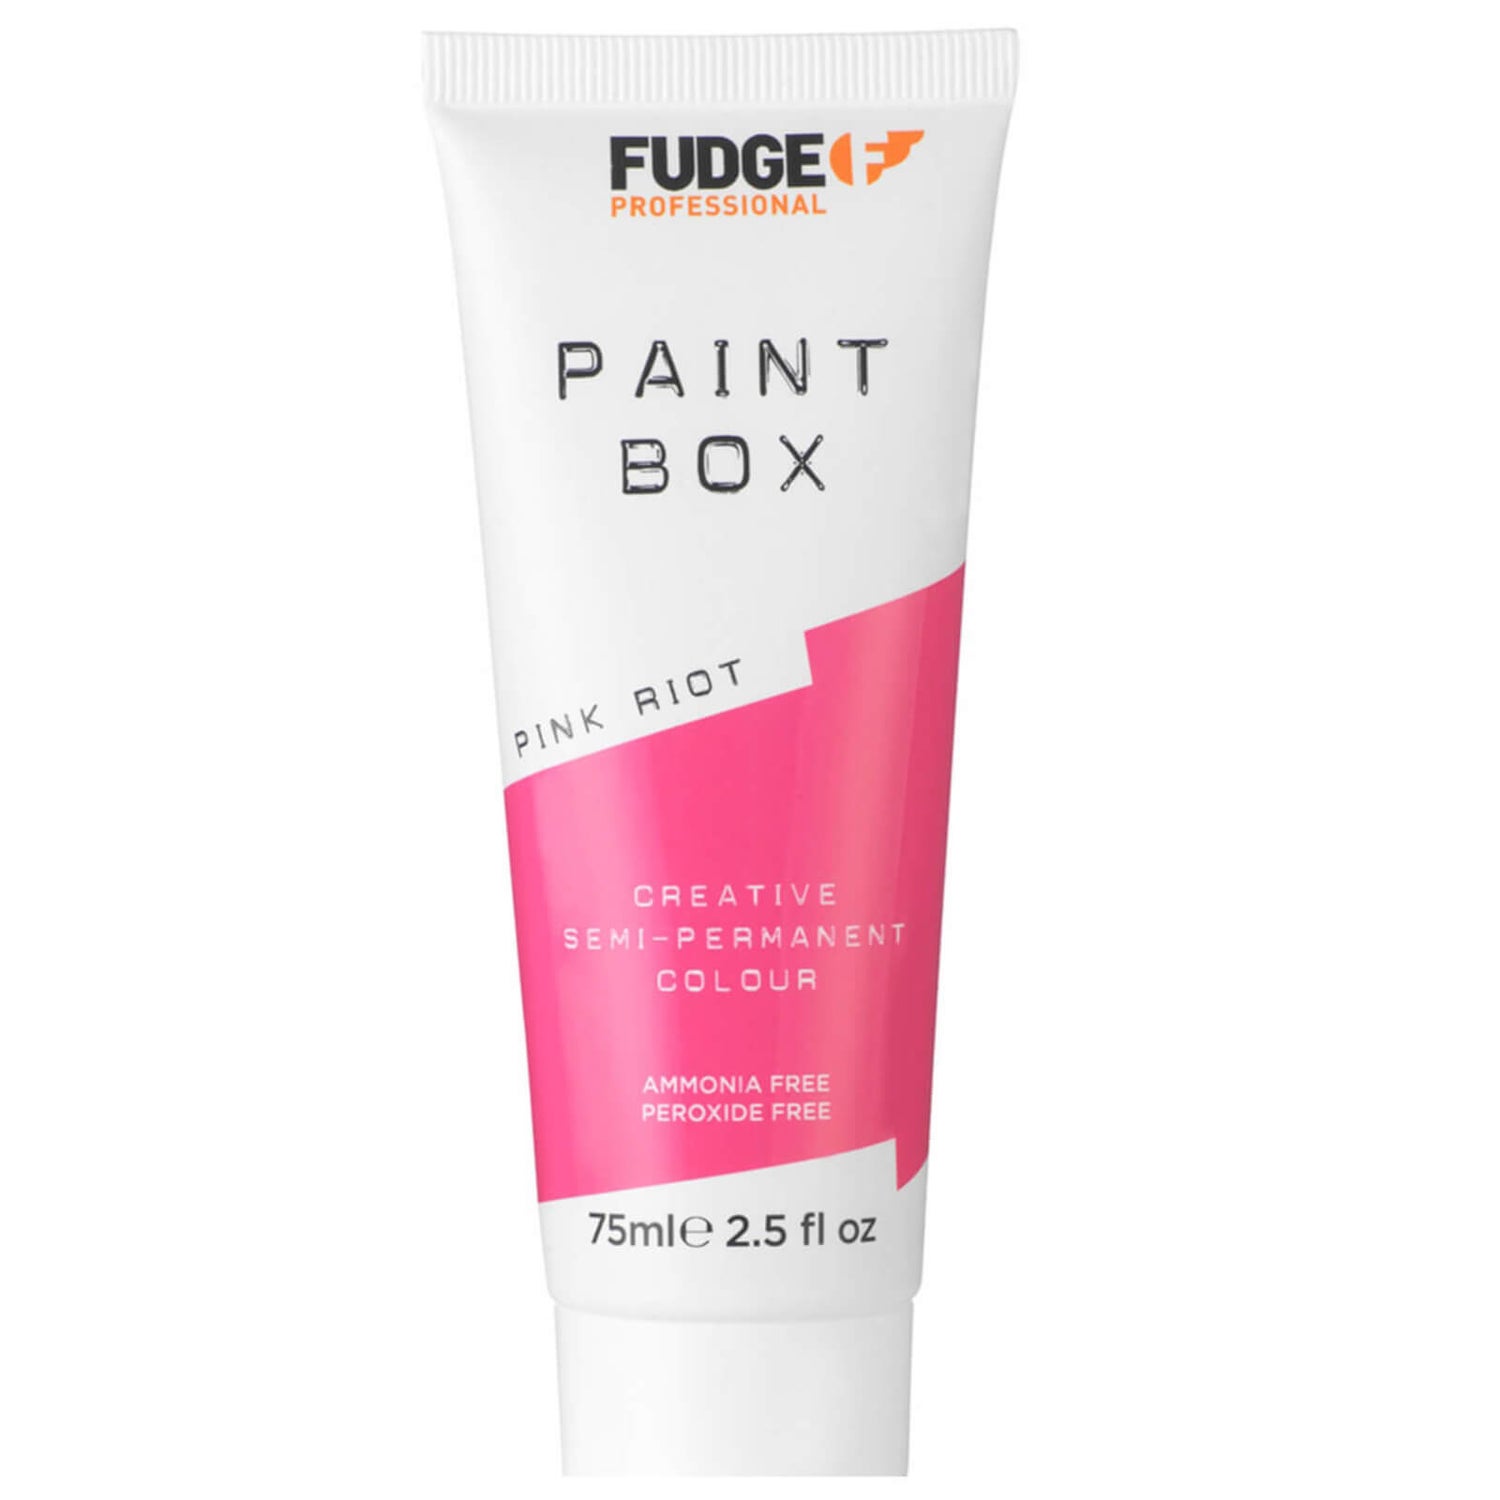 Fudge Paintbox Hair Colorant 75ml - Pink Riot